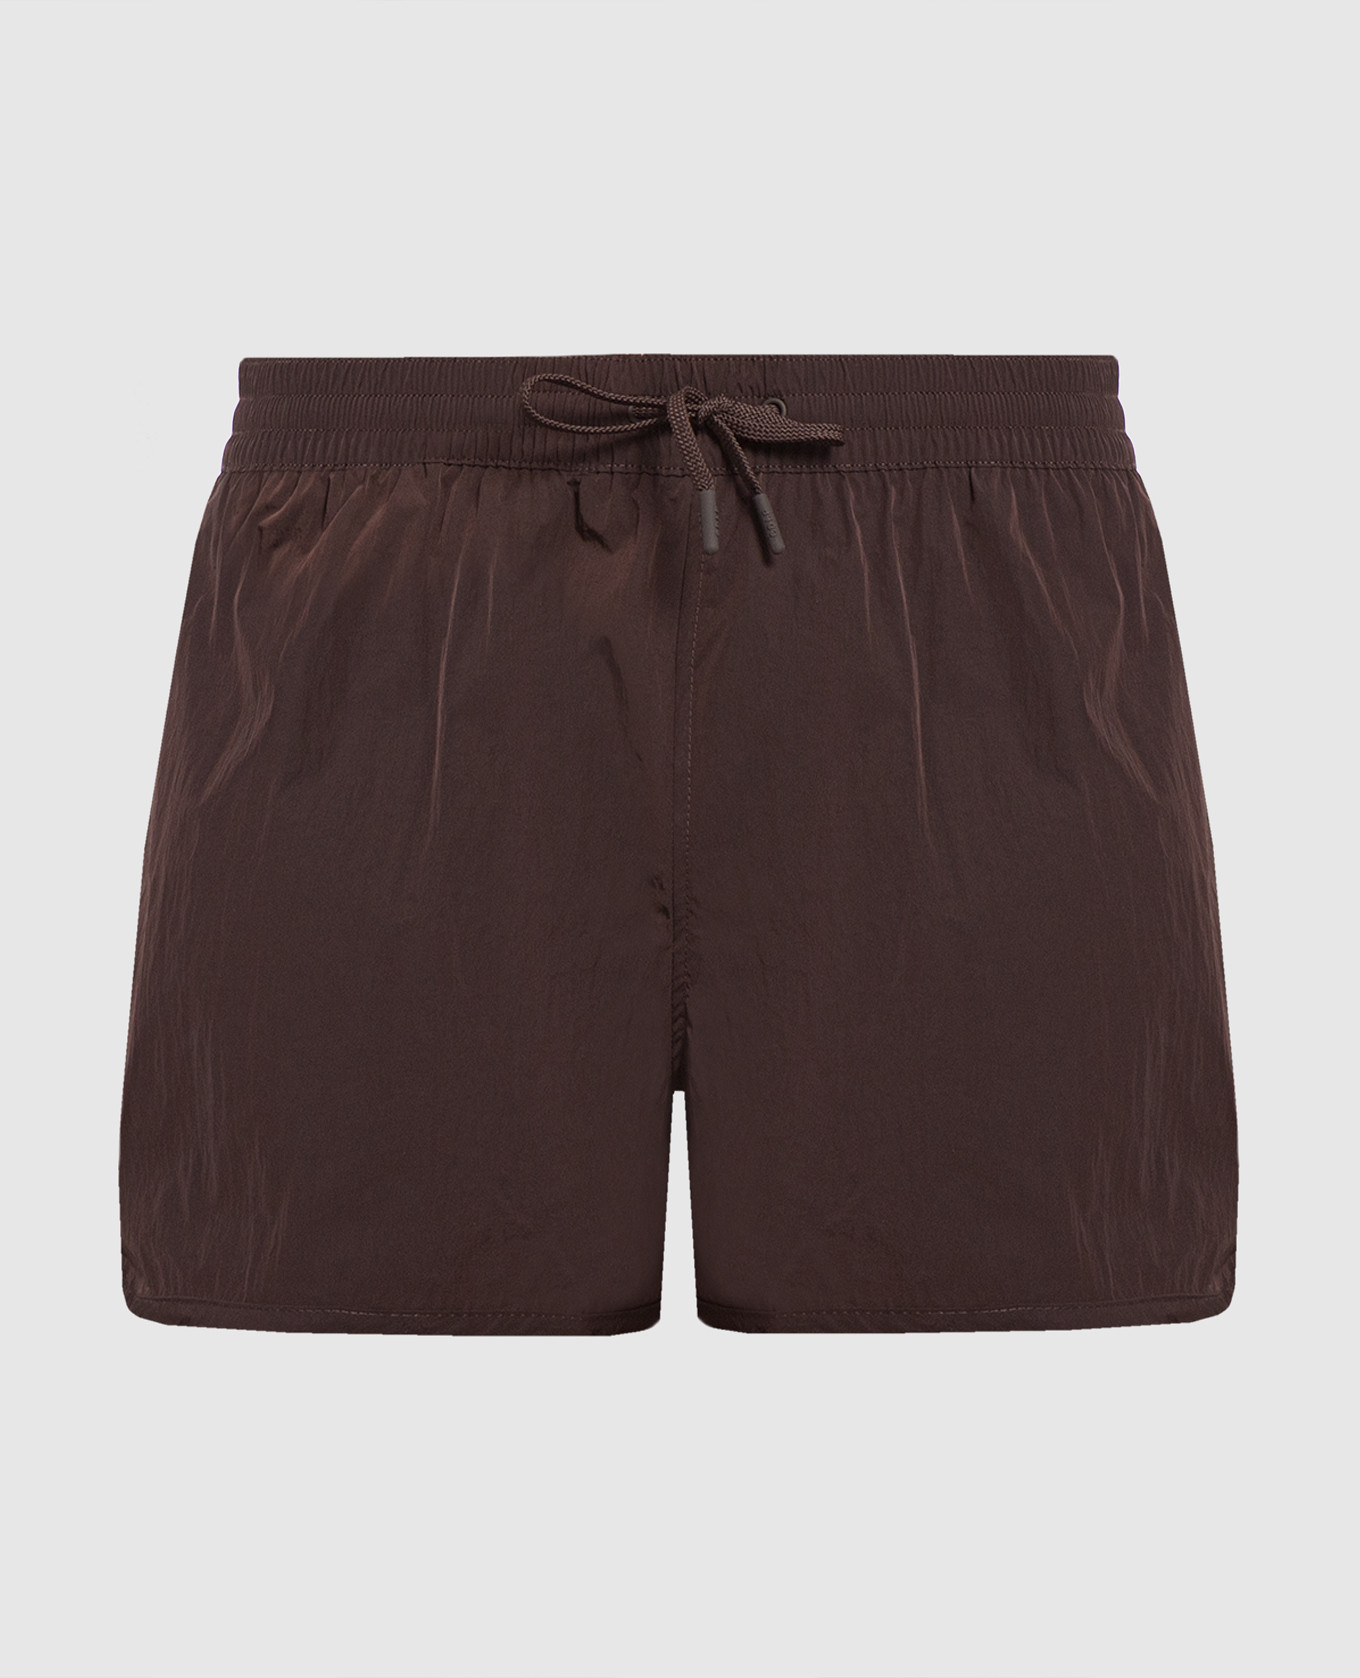 Brown swimming shorts